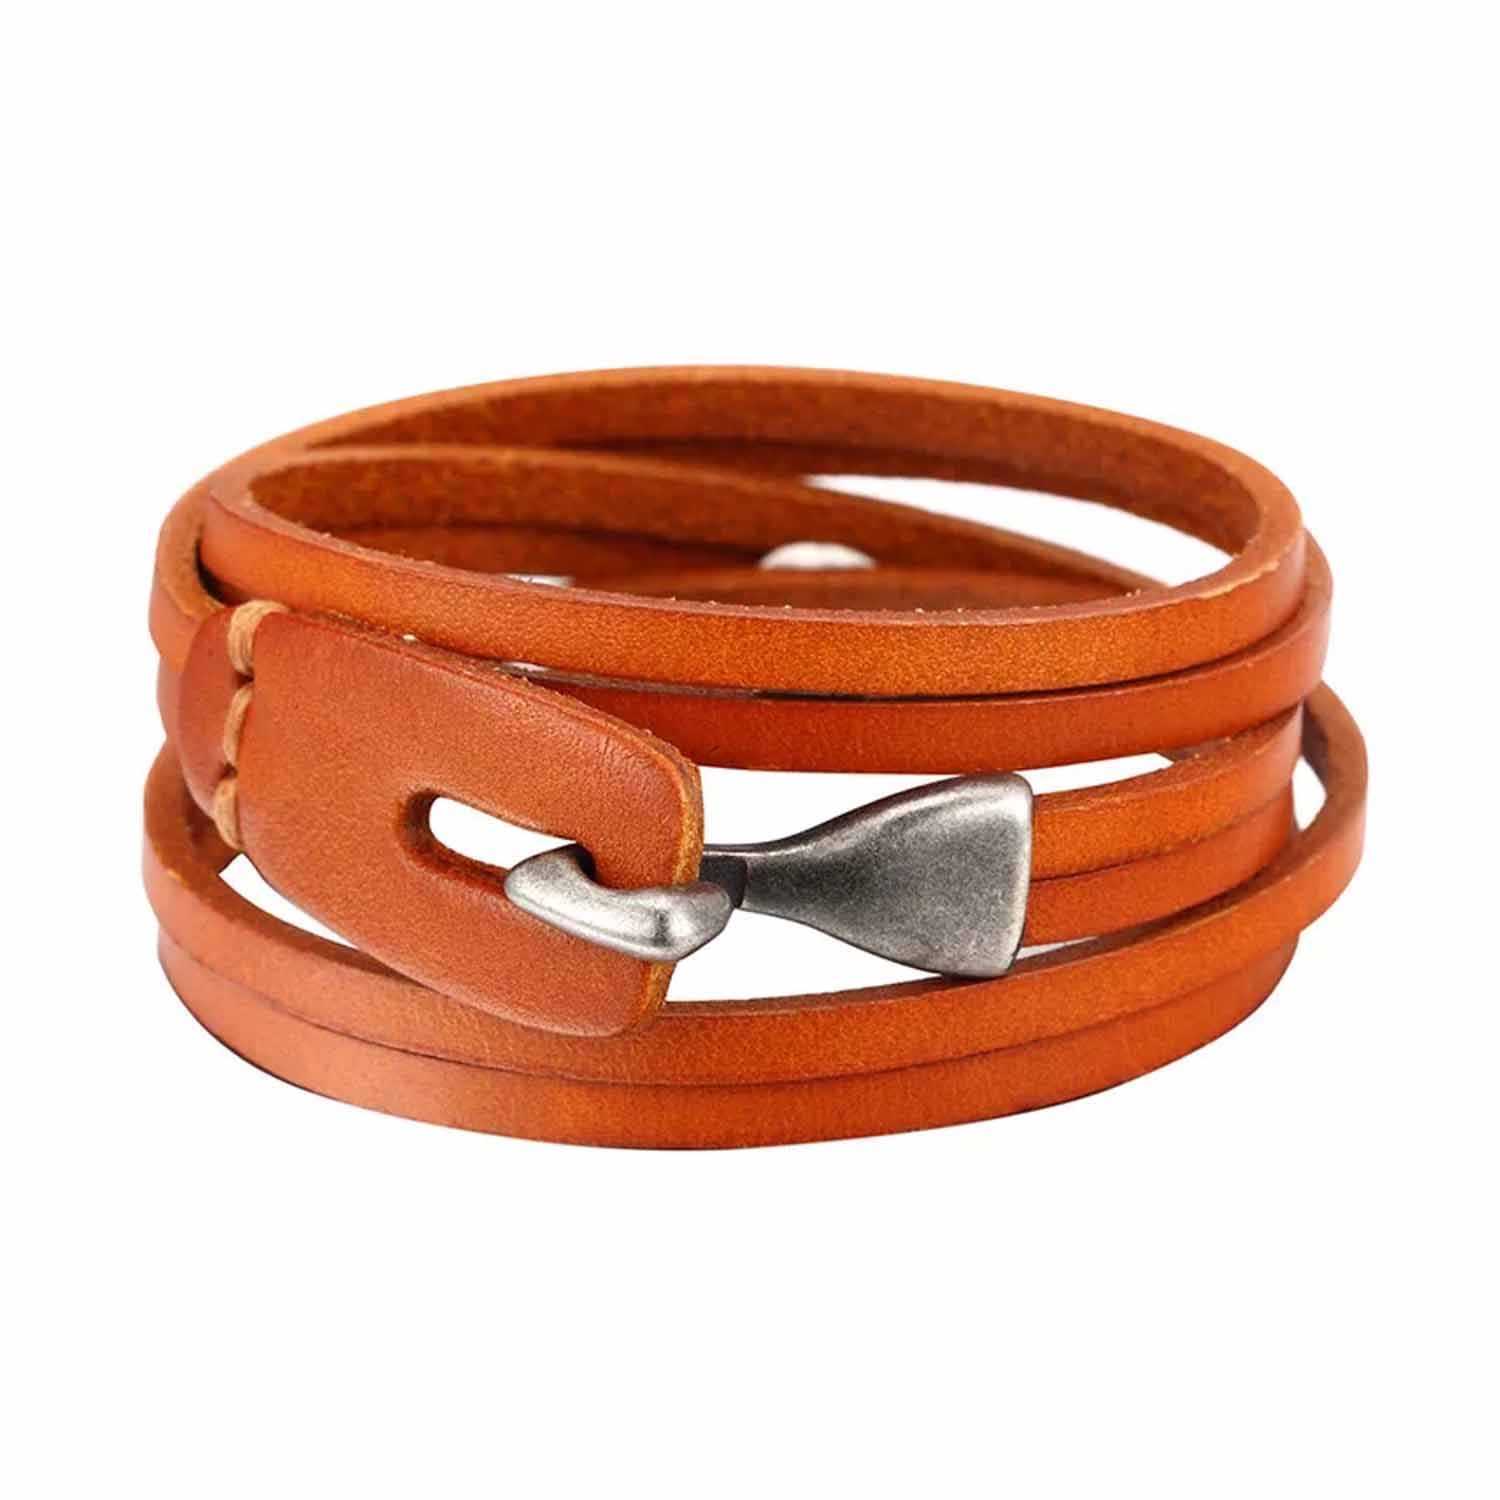 Men's Brown Tan Multilayer Leather Bracelet With Hook Closure N'Damus London